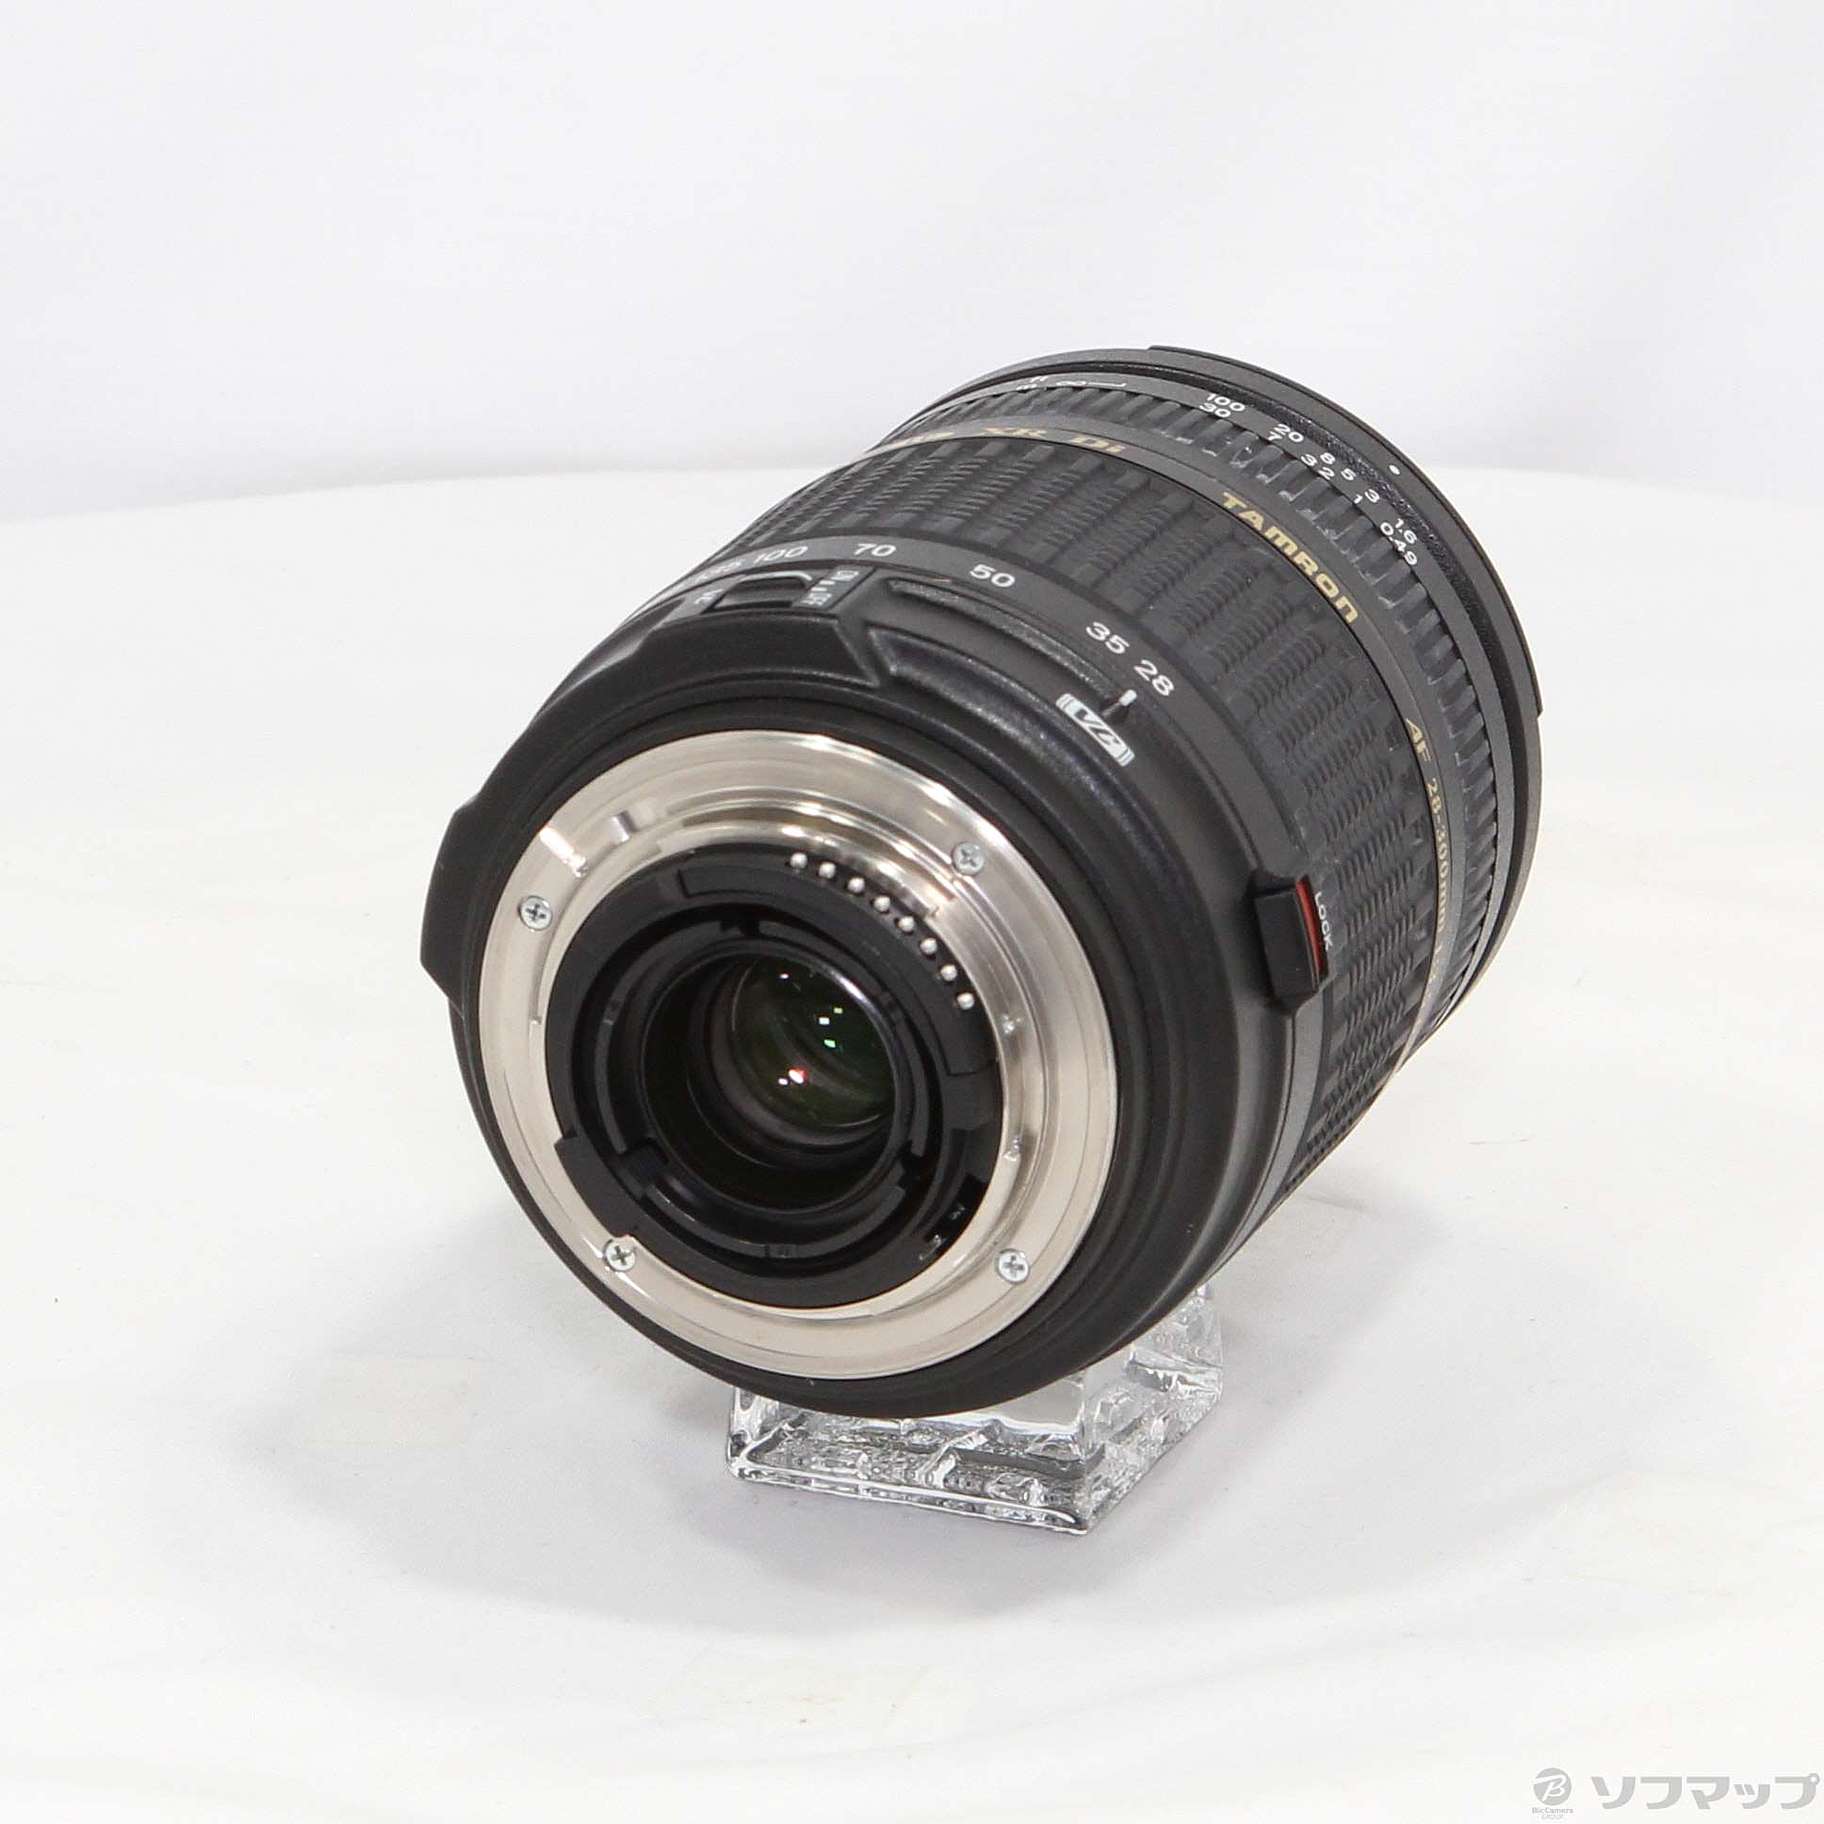 中古】TAMRON AF 28-300mm F3.5-6.3 XR Di VC (A20N2) (Nikon用